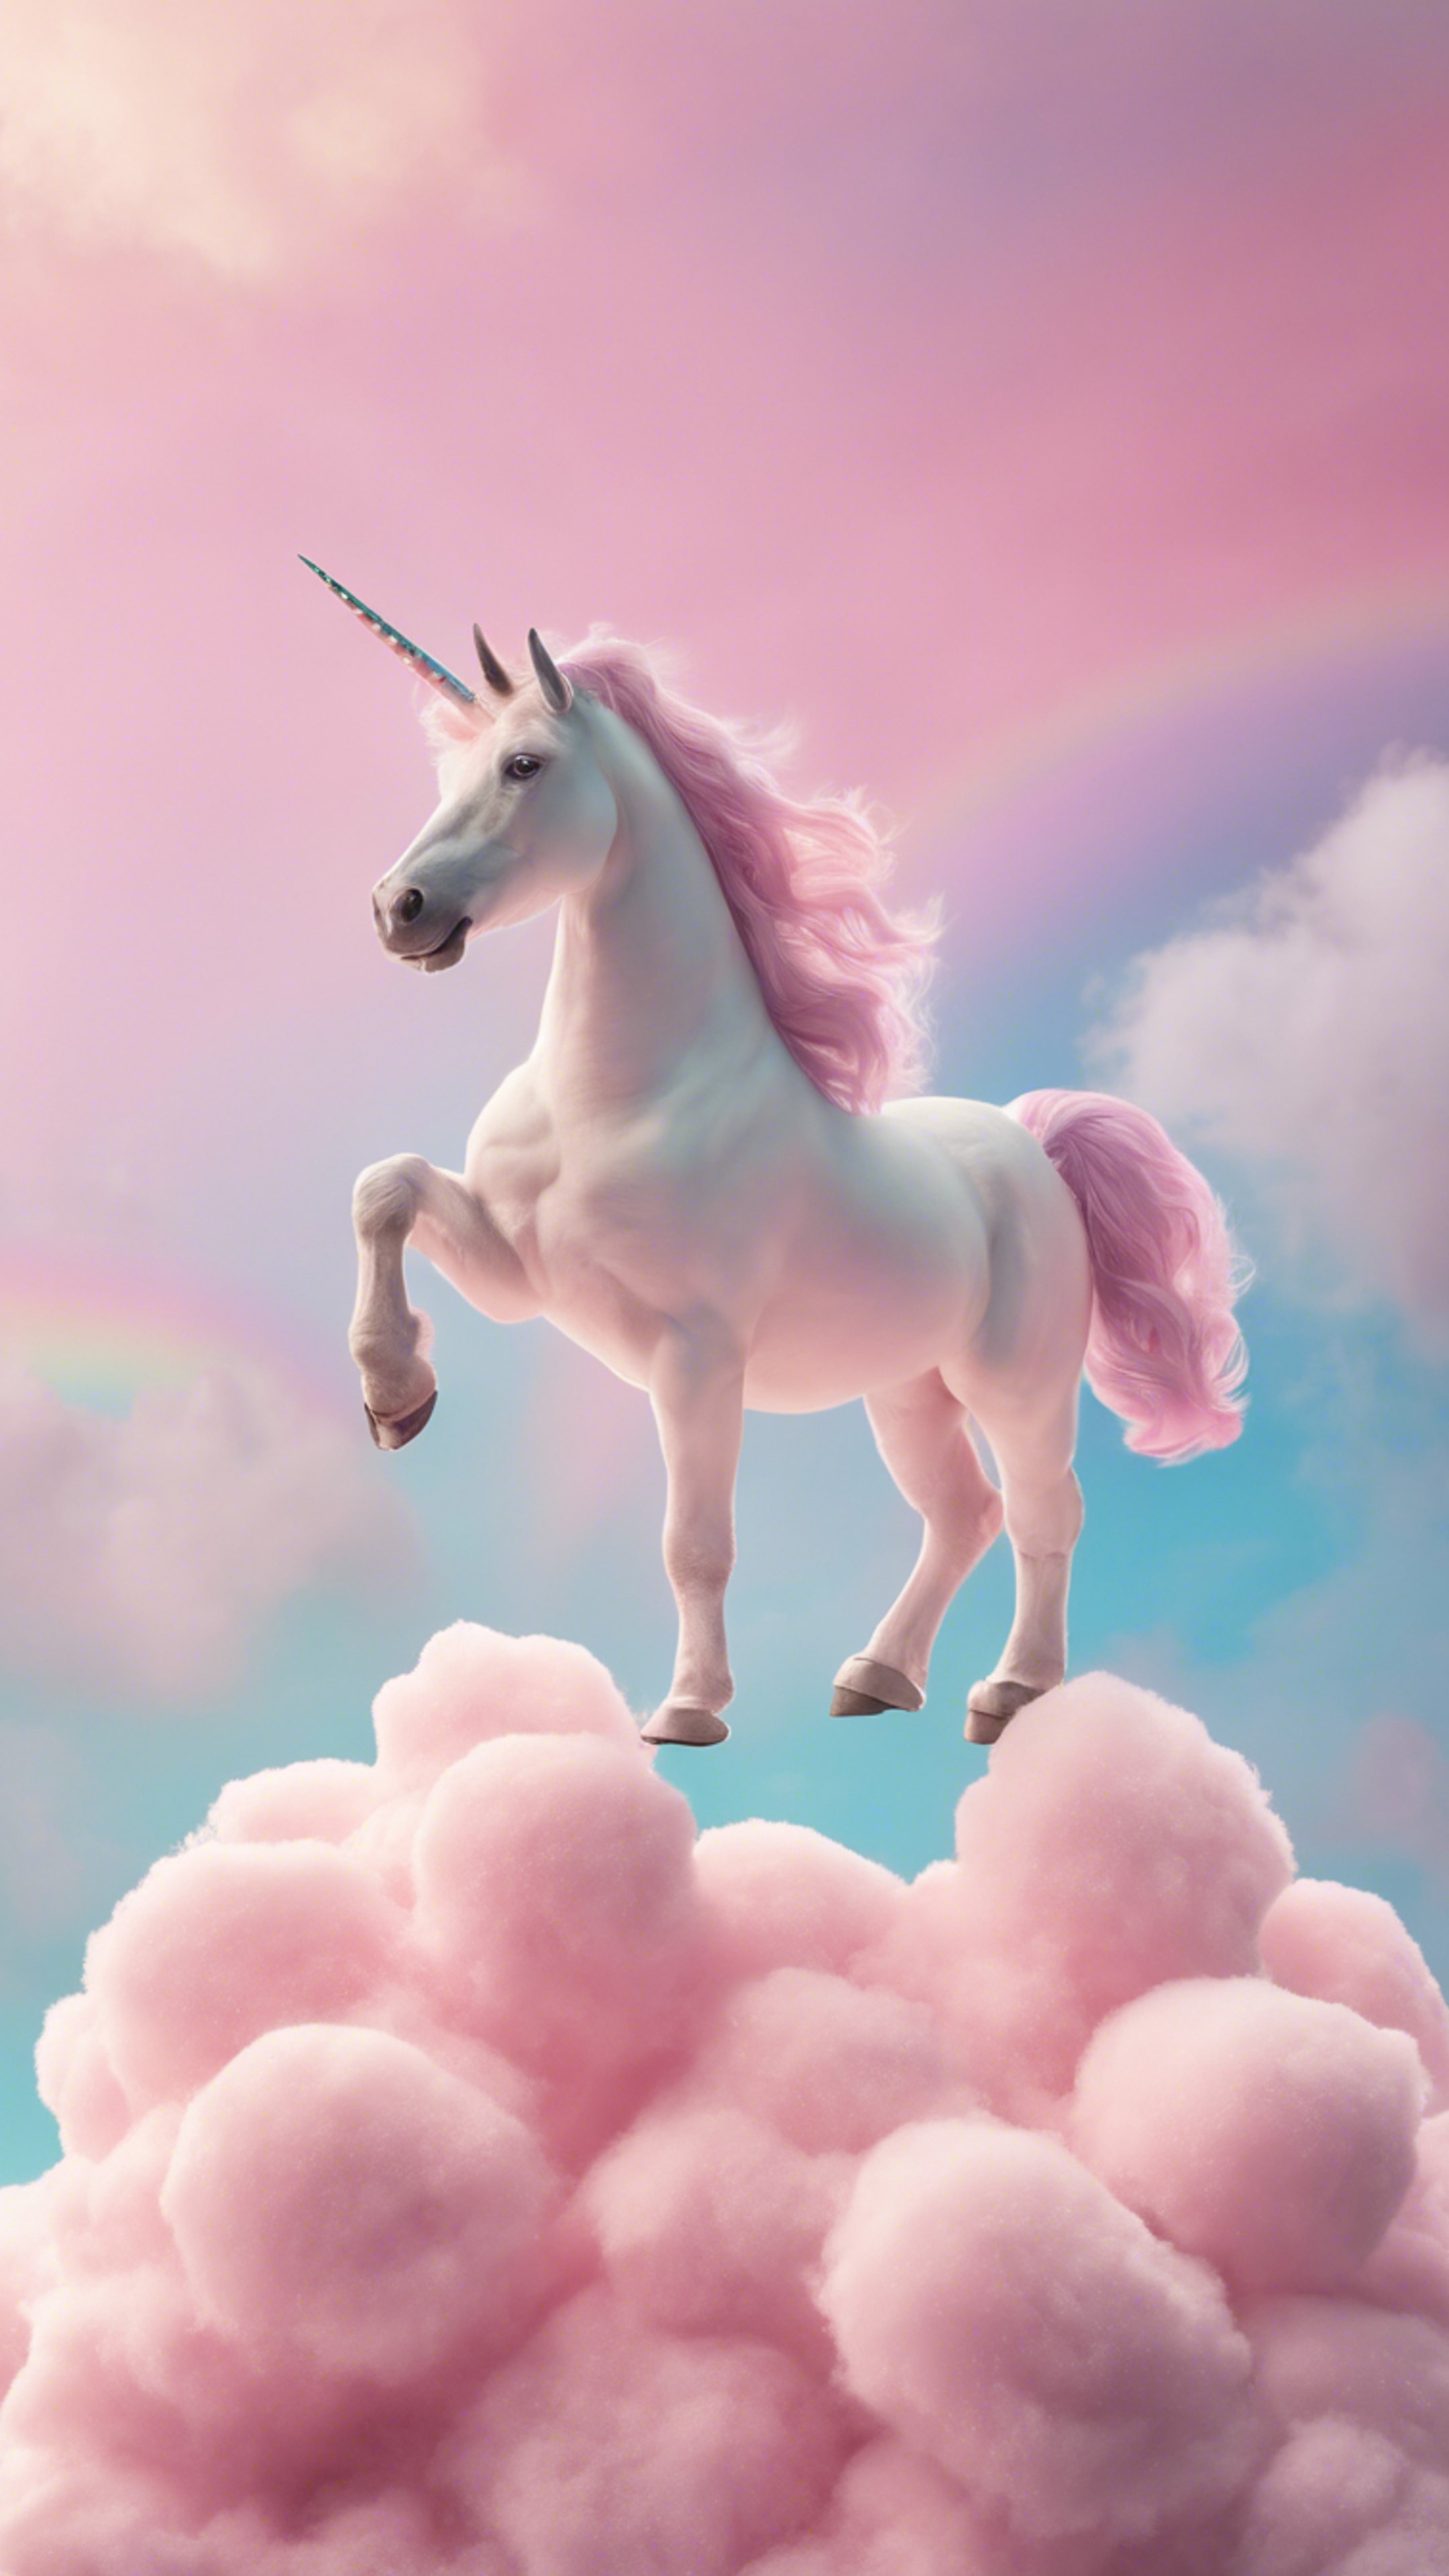 A soft, light pink, Kawaii Unicorn sitting on a pastel rainbow amidst a cotton candy cloud-filled sky. Wallpaper[259e72f48eaa46f08f48]